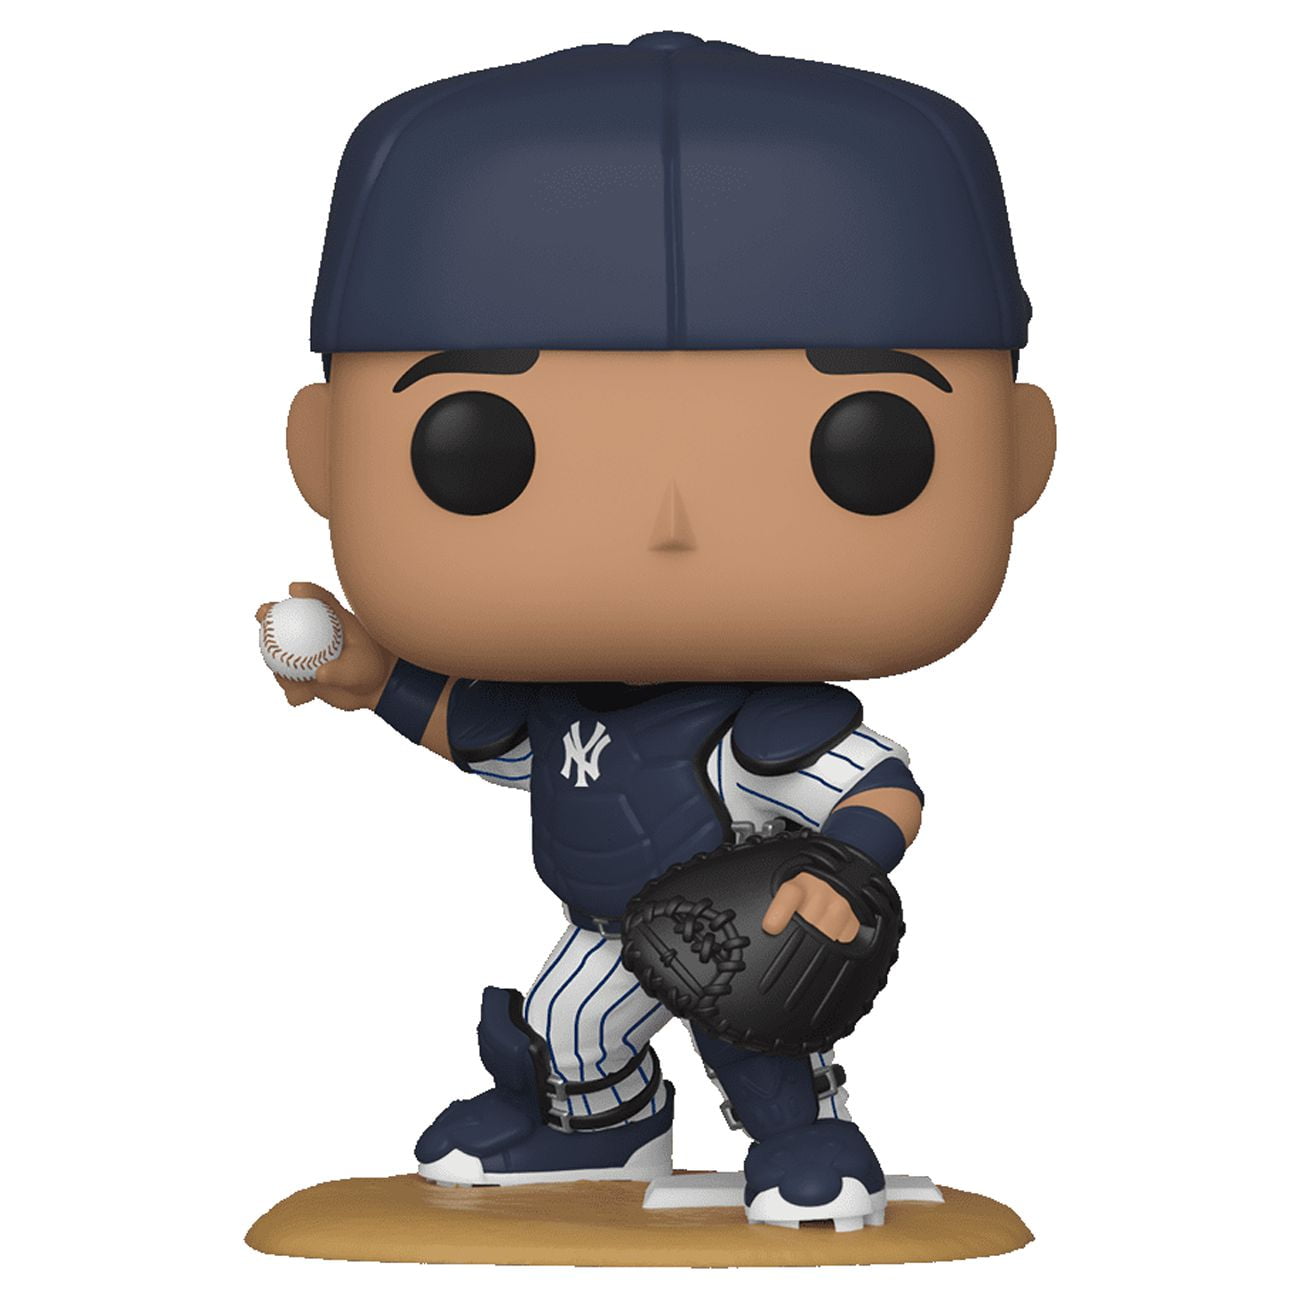 Funko POP! MLB: Yankees – Gary Sanchez